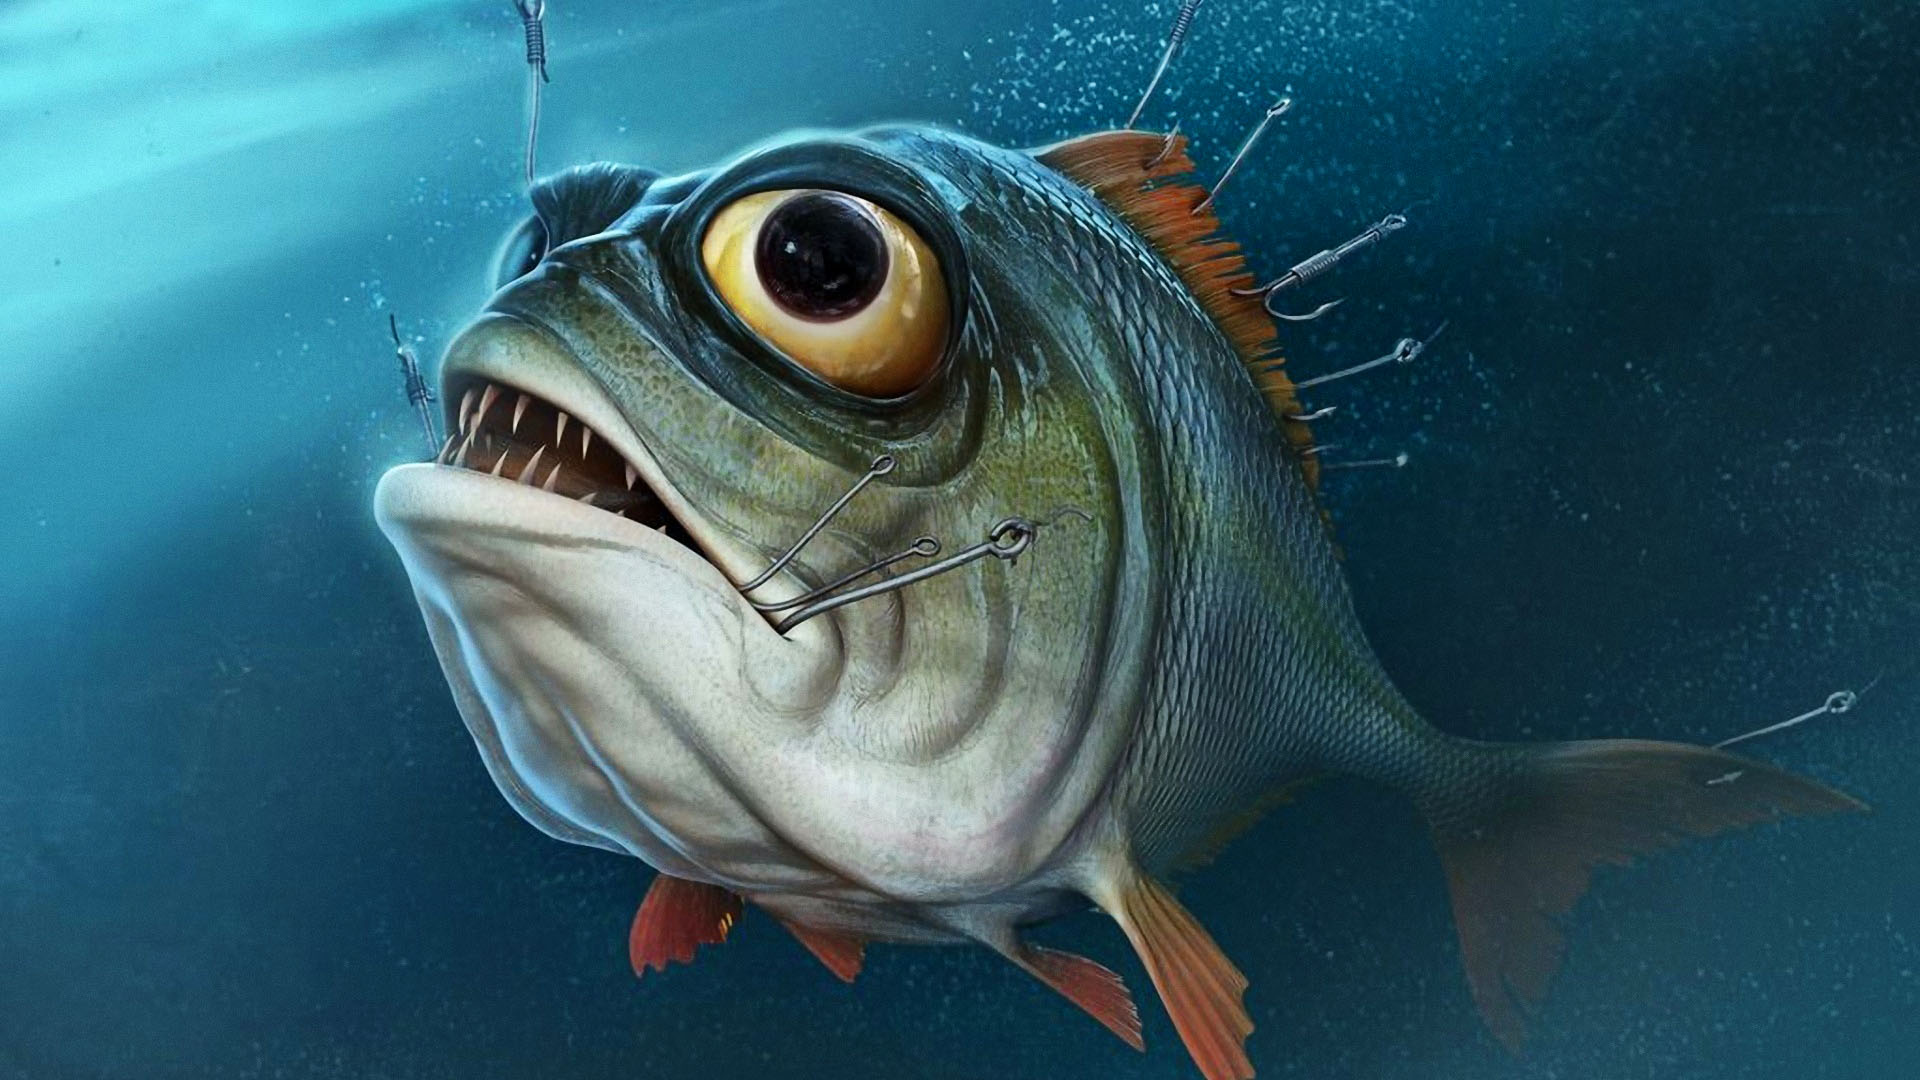 bass fishing wallpaper hd,fish,fish,deep sea fish,marine biology,bony fish